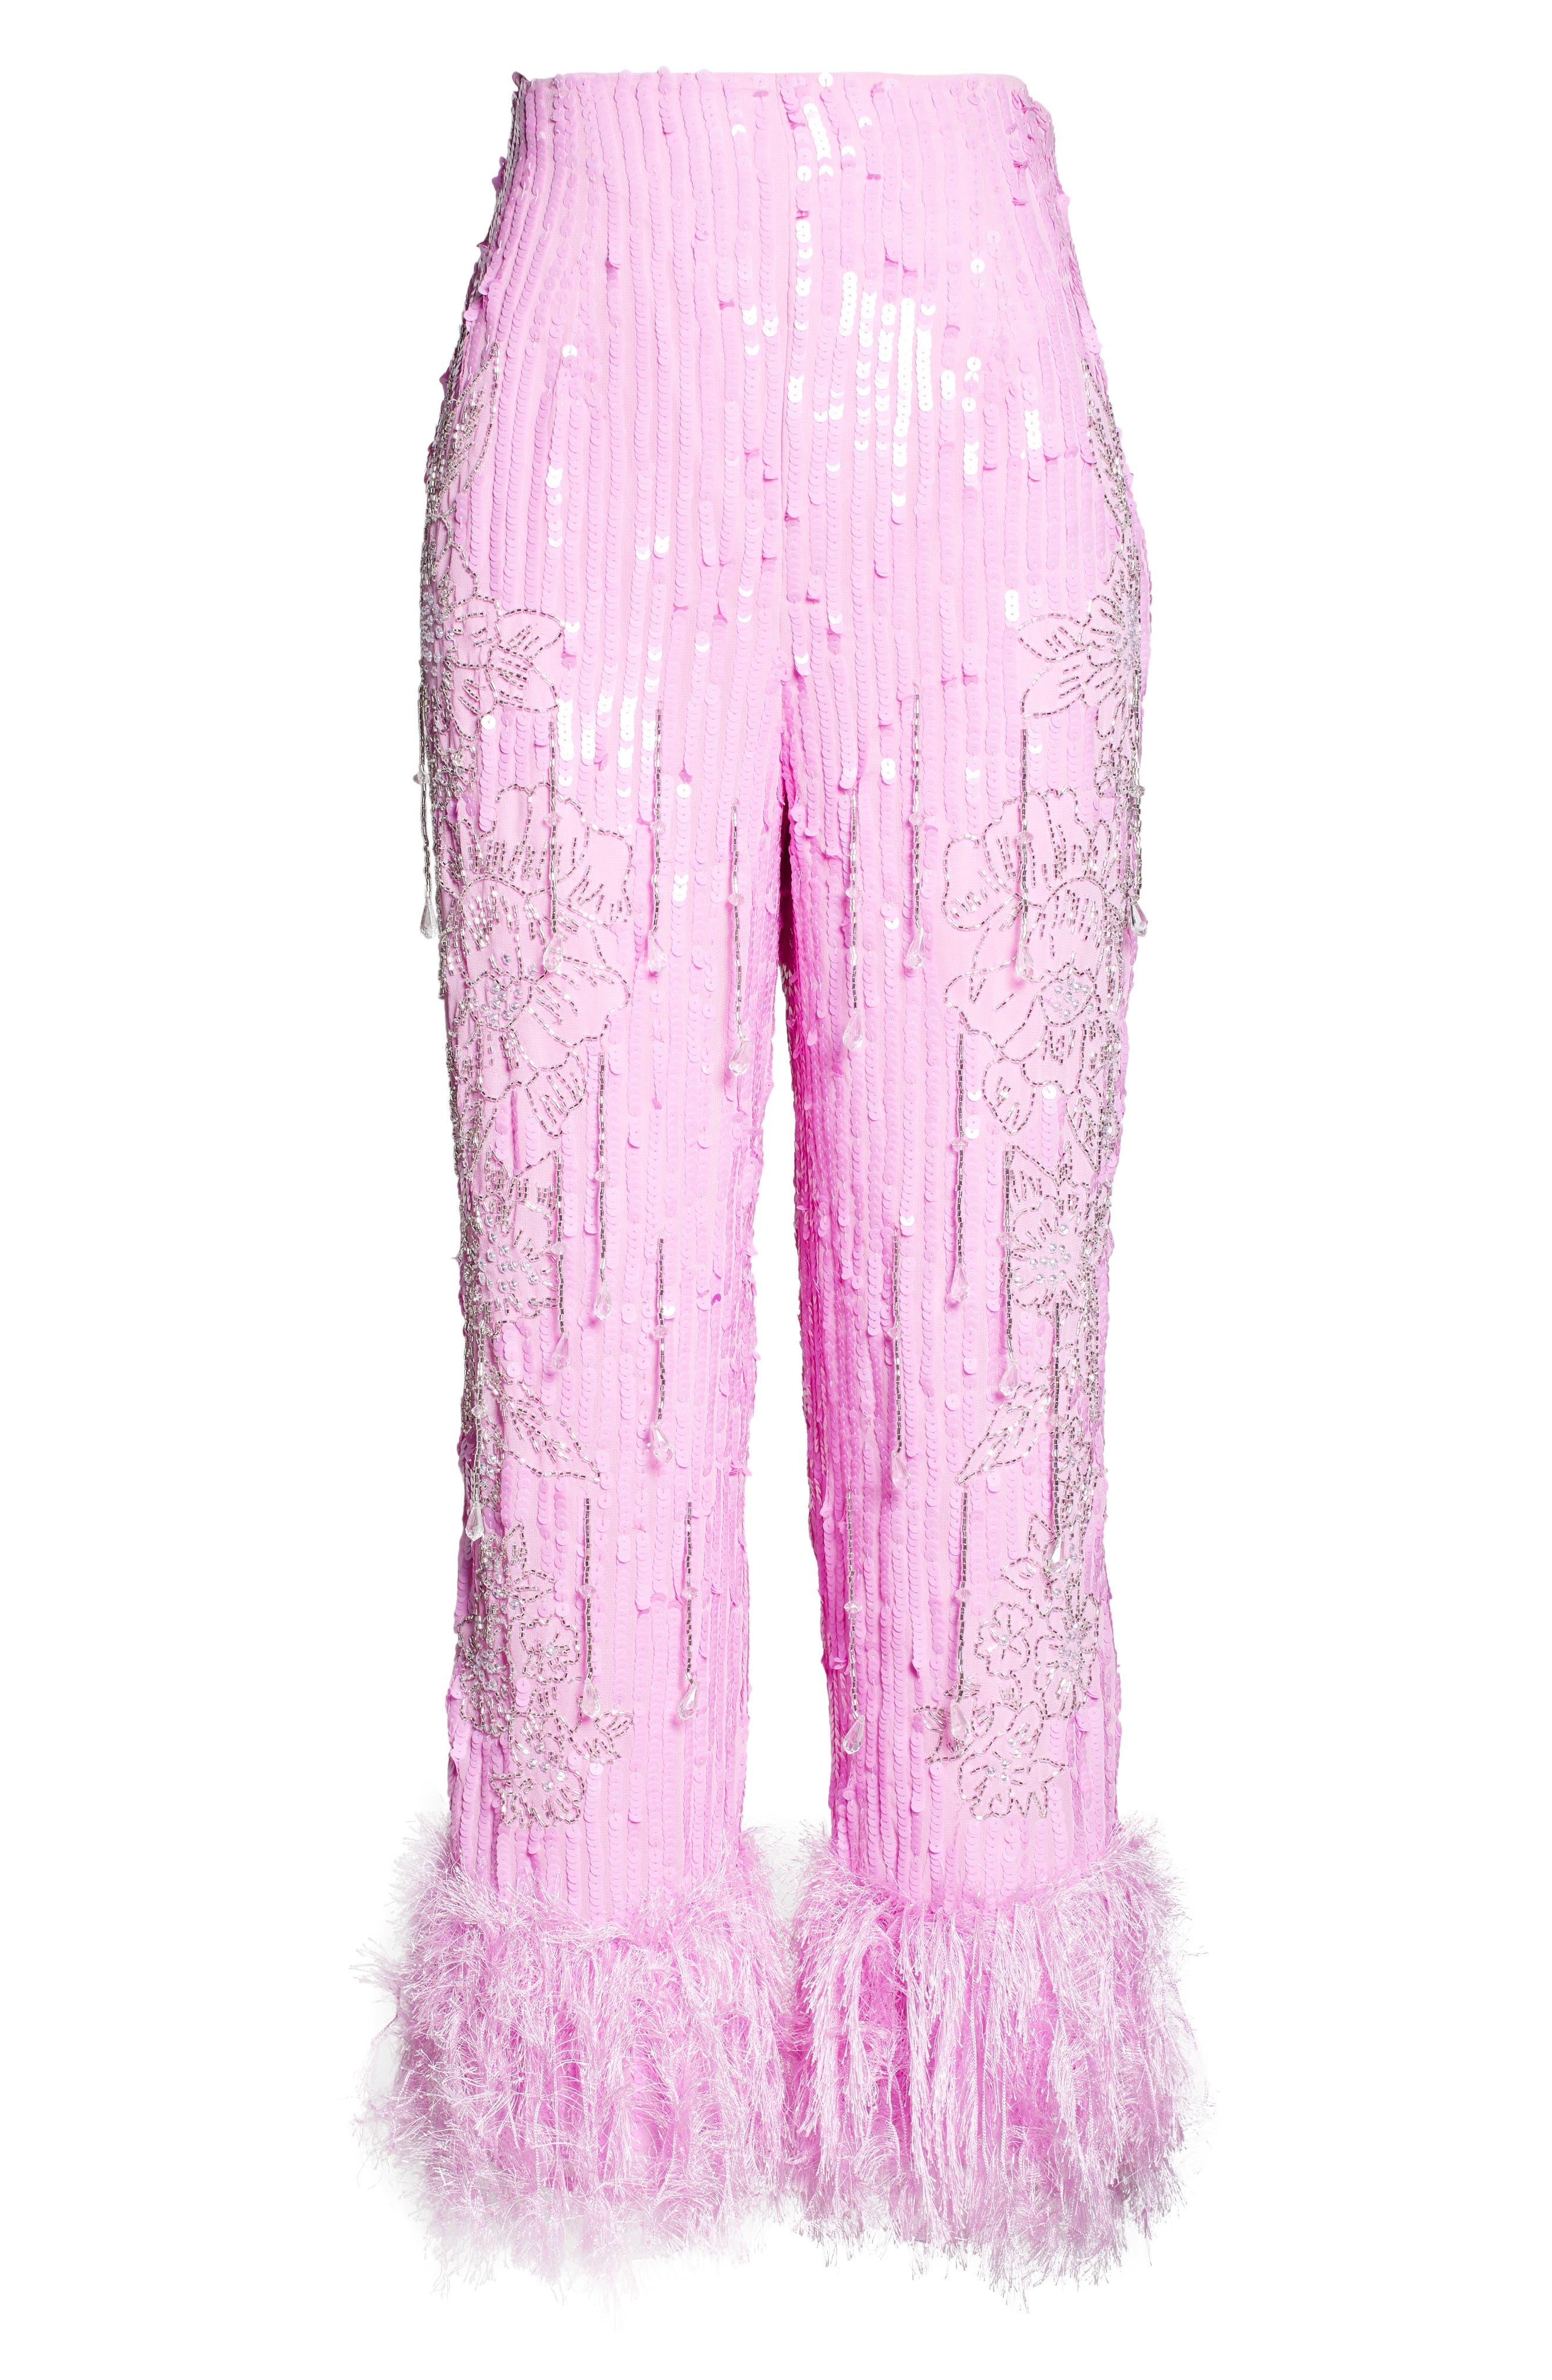 ASOS EDITION sequin cami crop top in pink